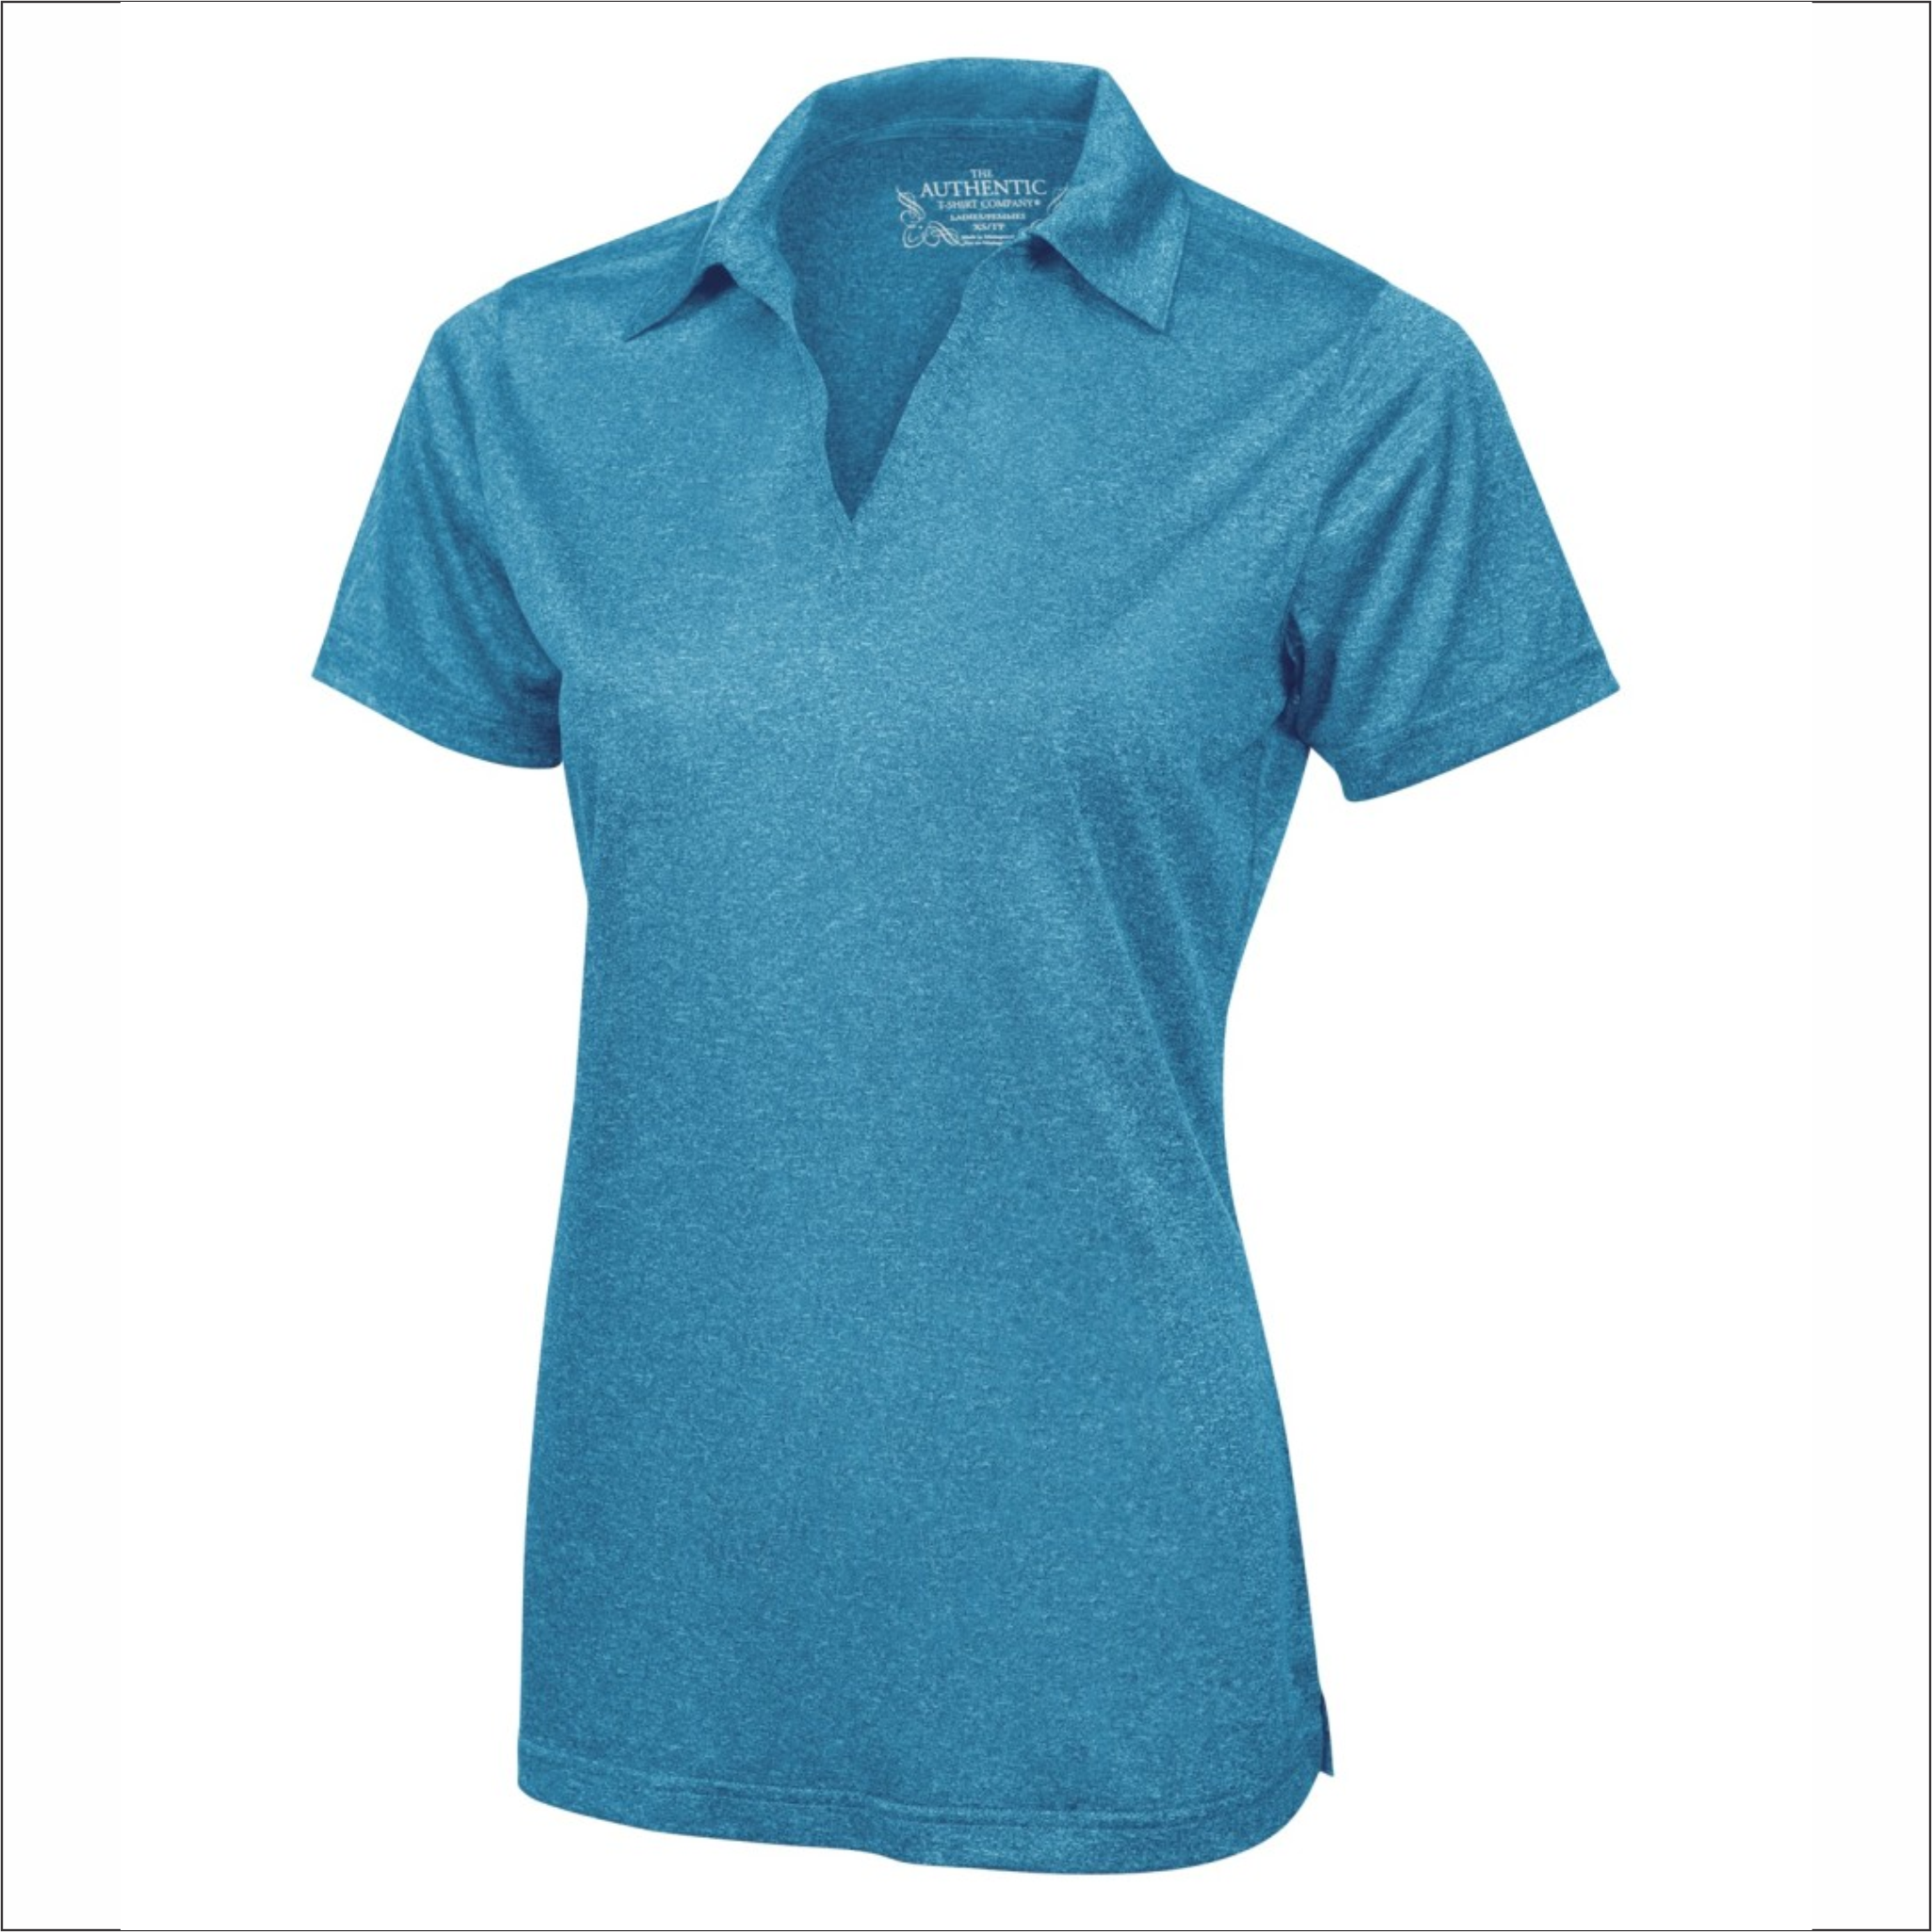 Pro Team Heather ProFormance - Ladies Sport Shirt - ATC L3518